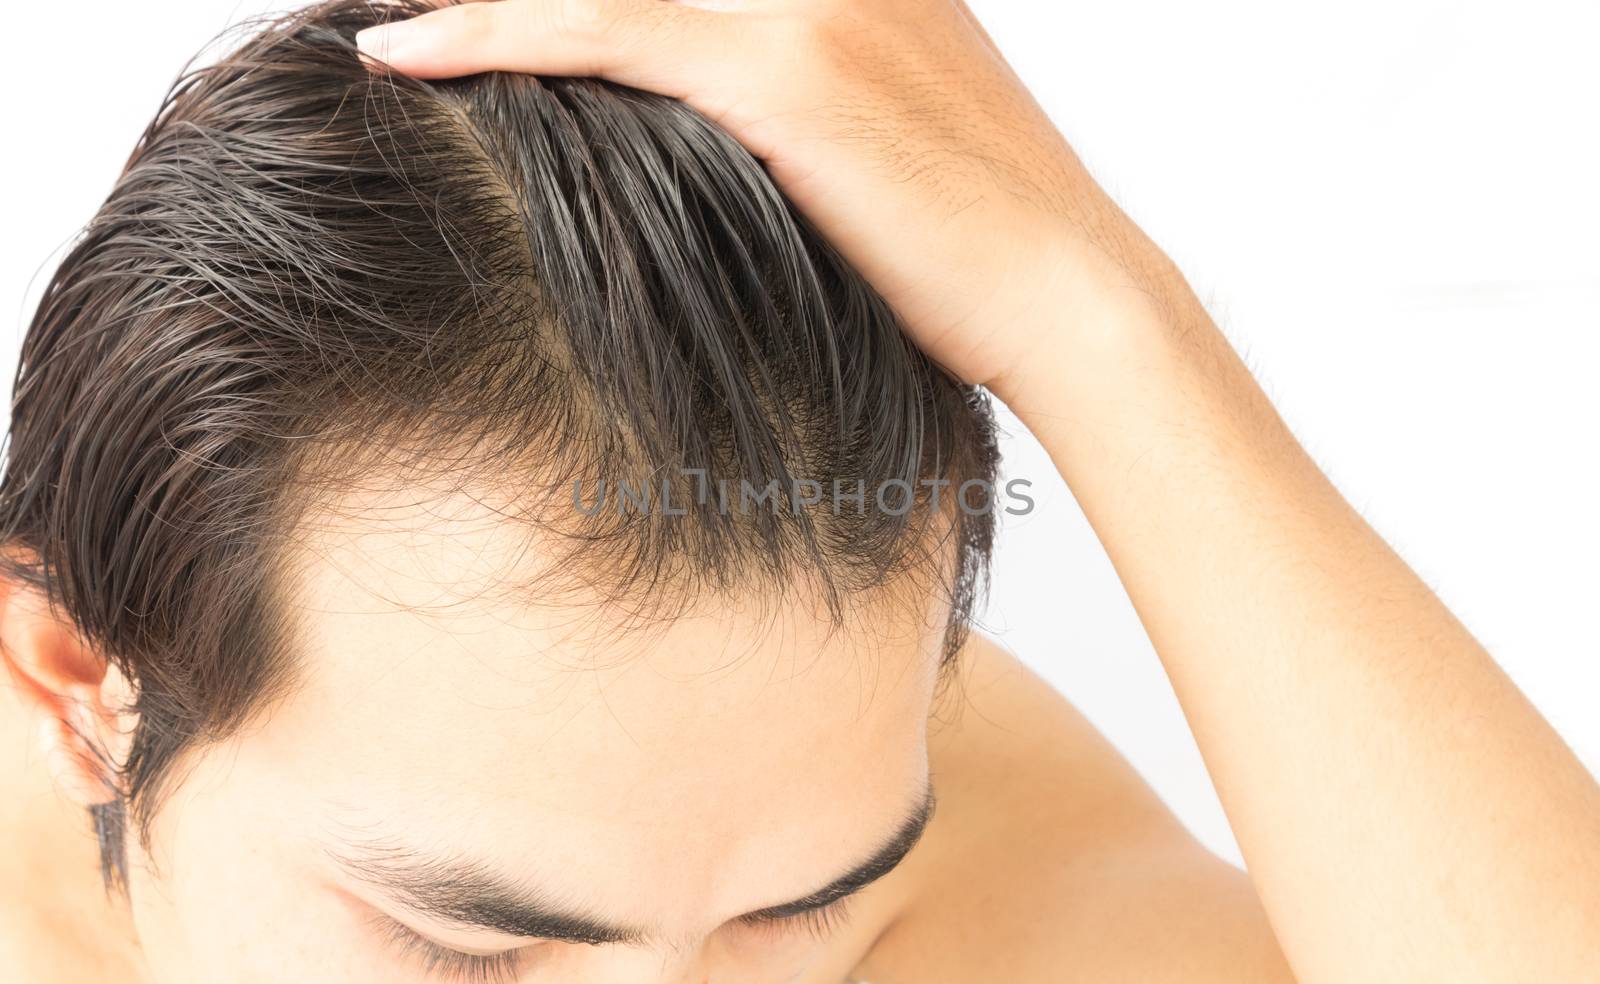 Closeup young man serious hair loss problem for health care sham by pt.pongsak@gmail.com